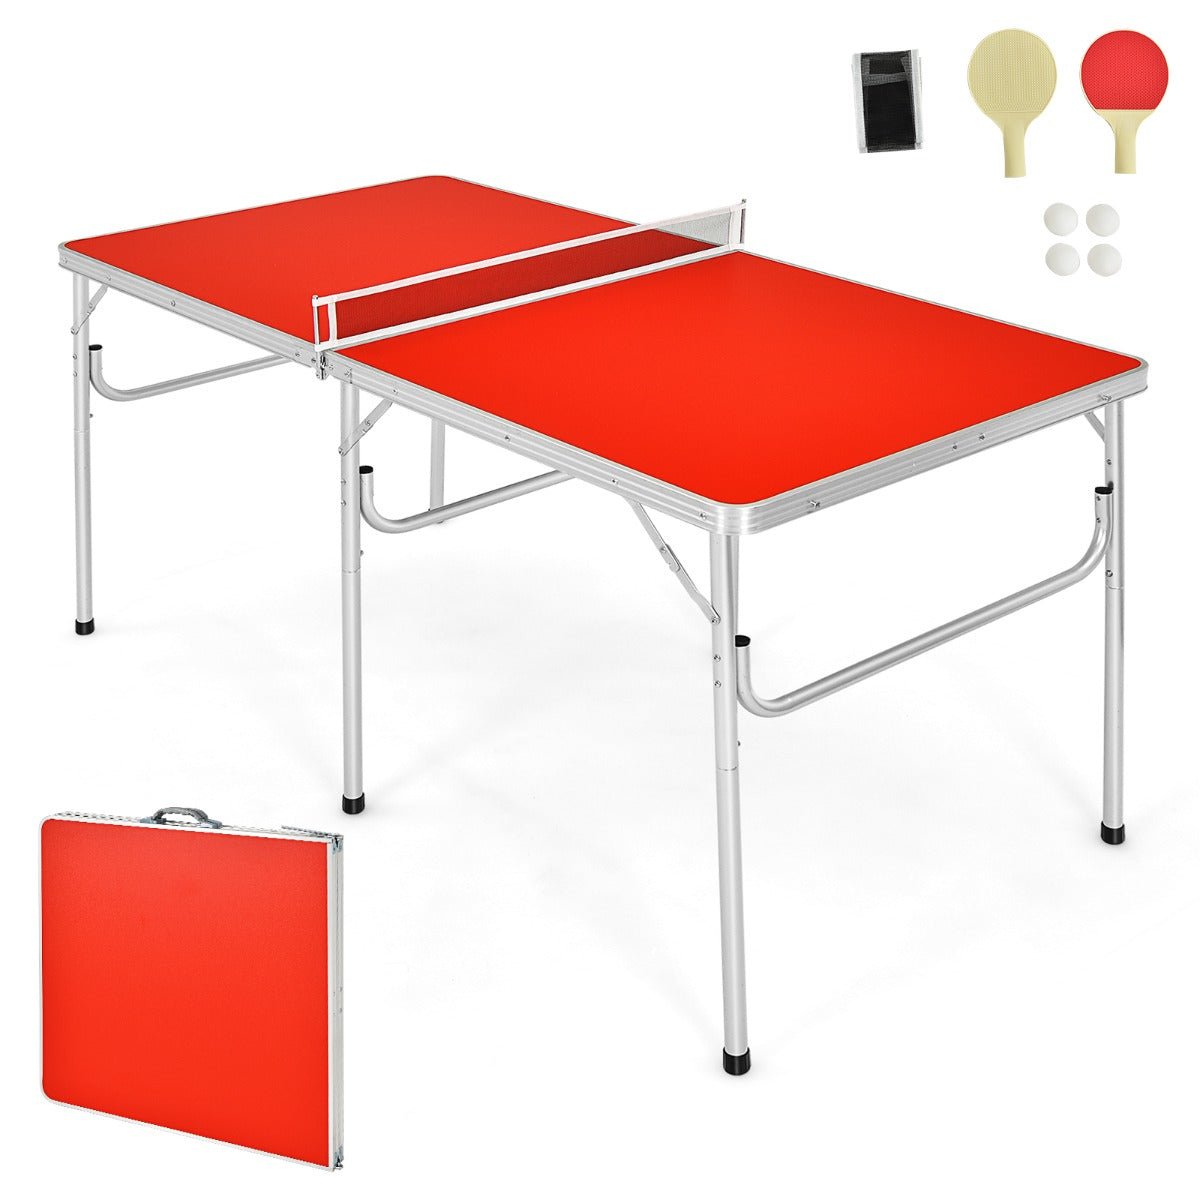 Enjoy Table Tennis Anywhere with Portable Folding Table Tennis Set